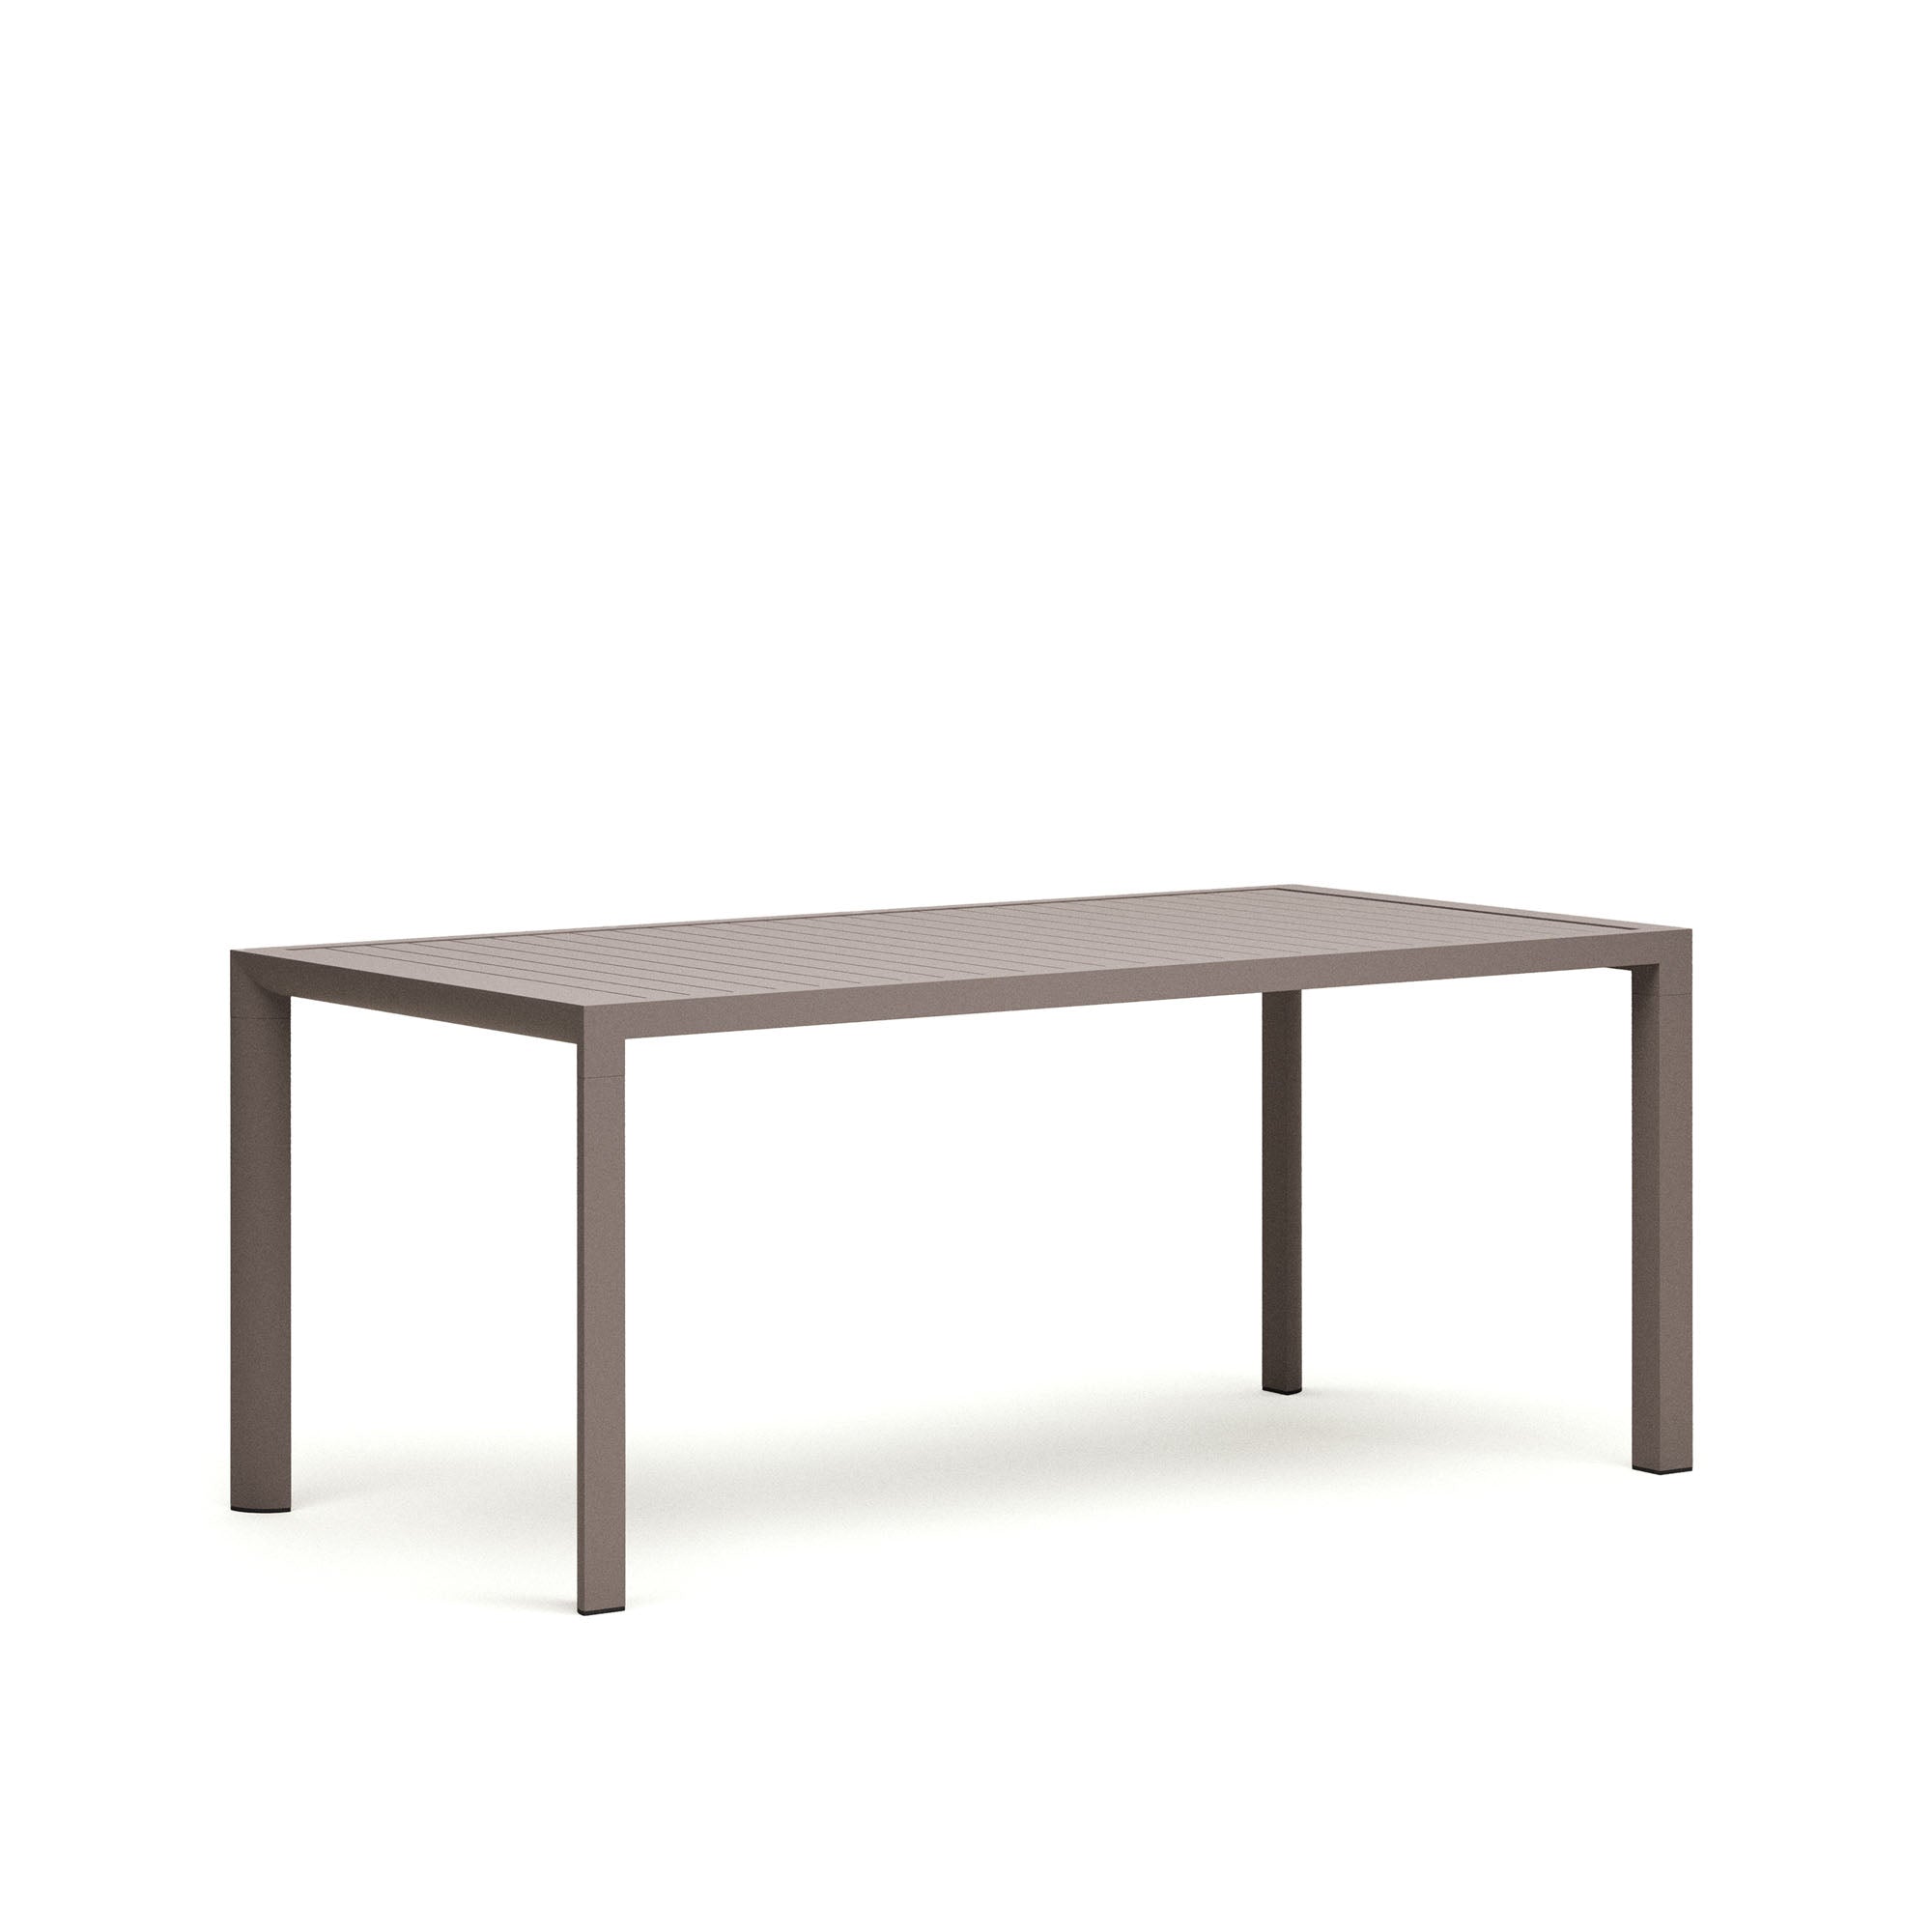 Culip aluminium outdoor table in powder coated brown finish, 180 x 90 cm